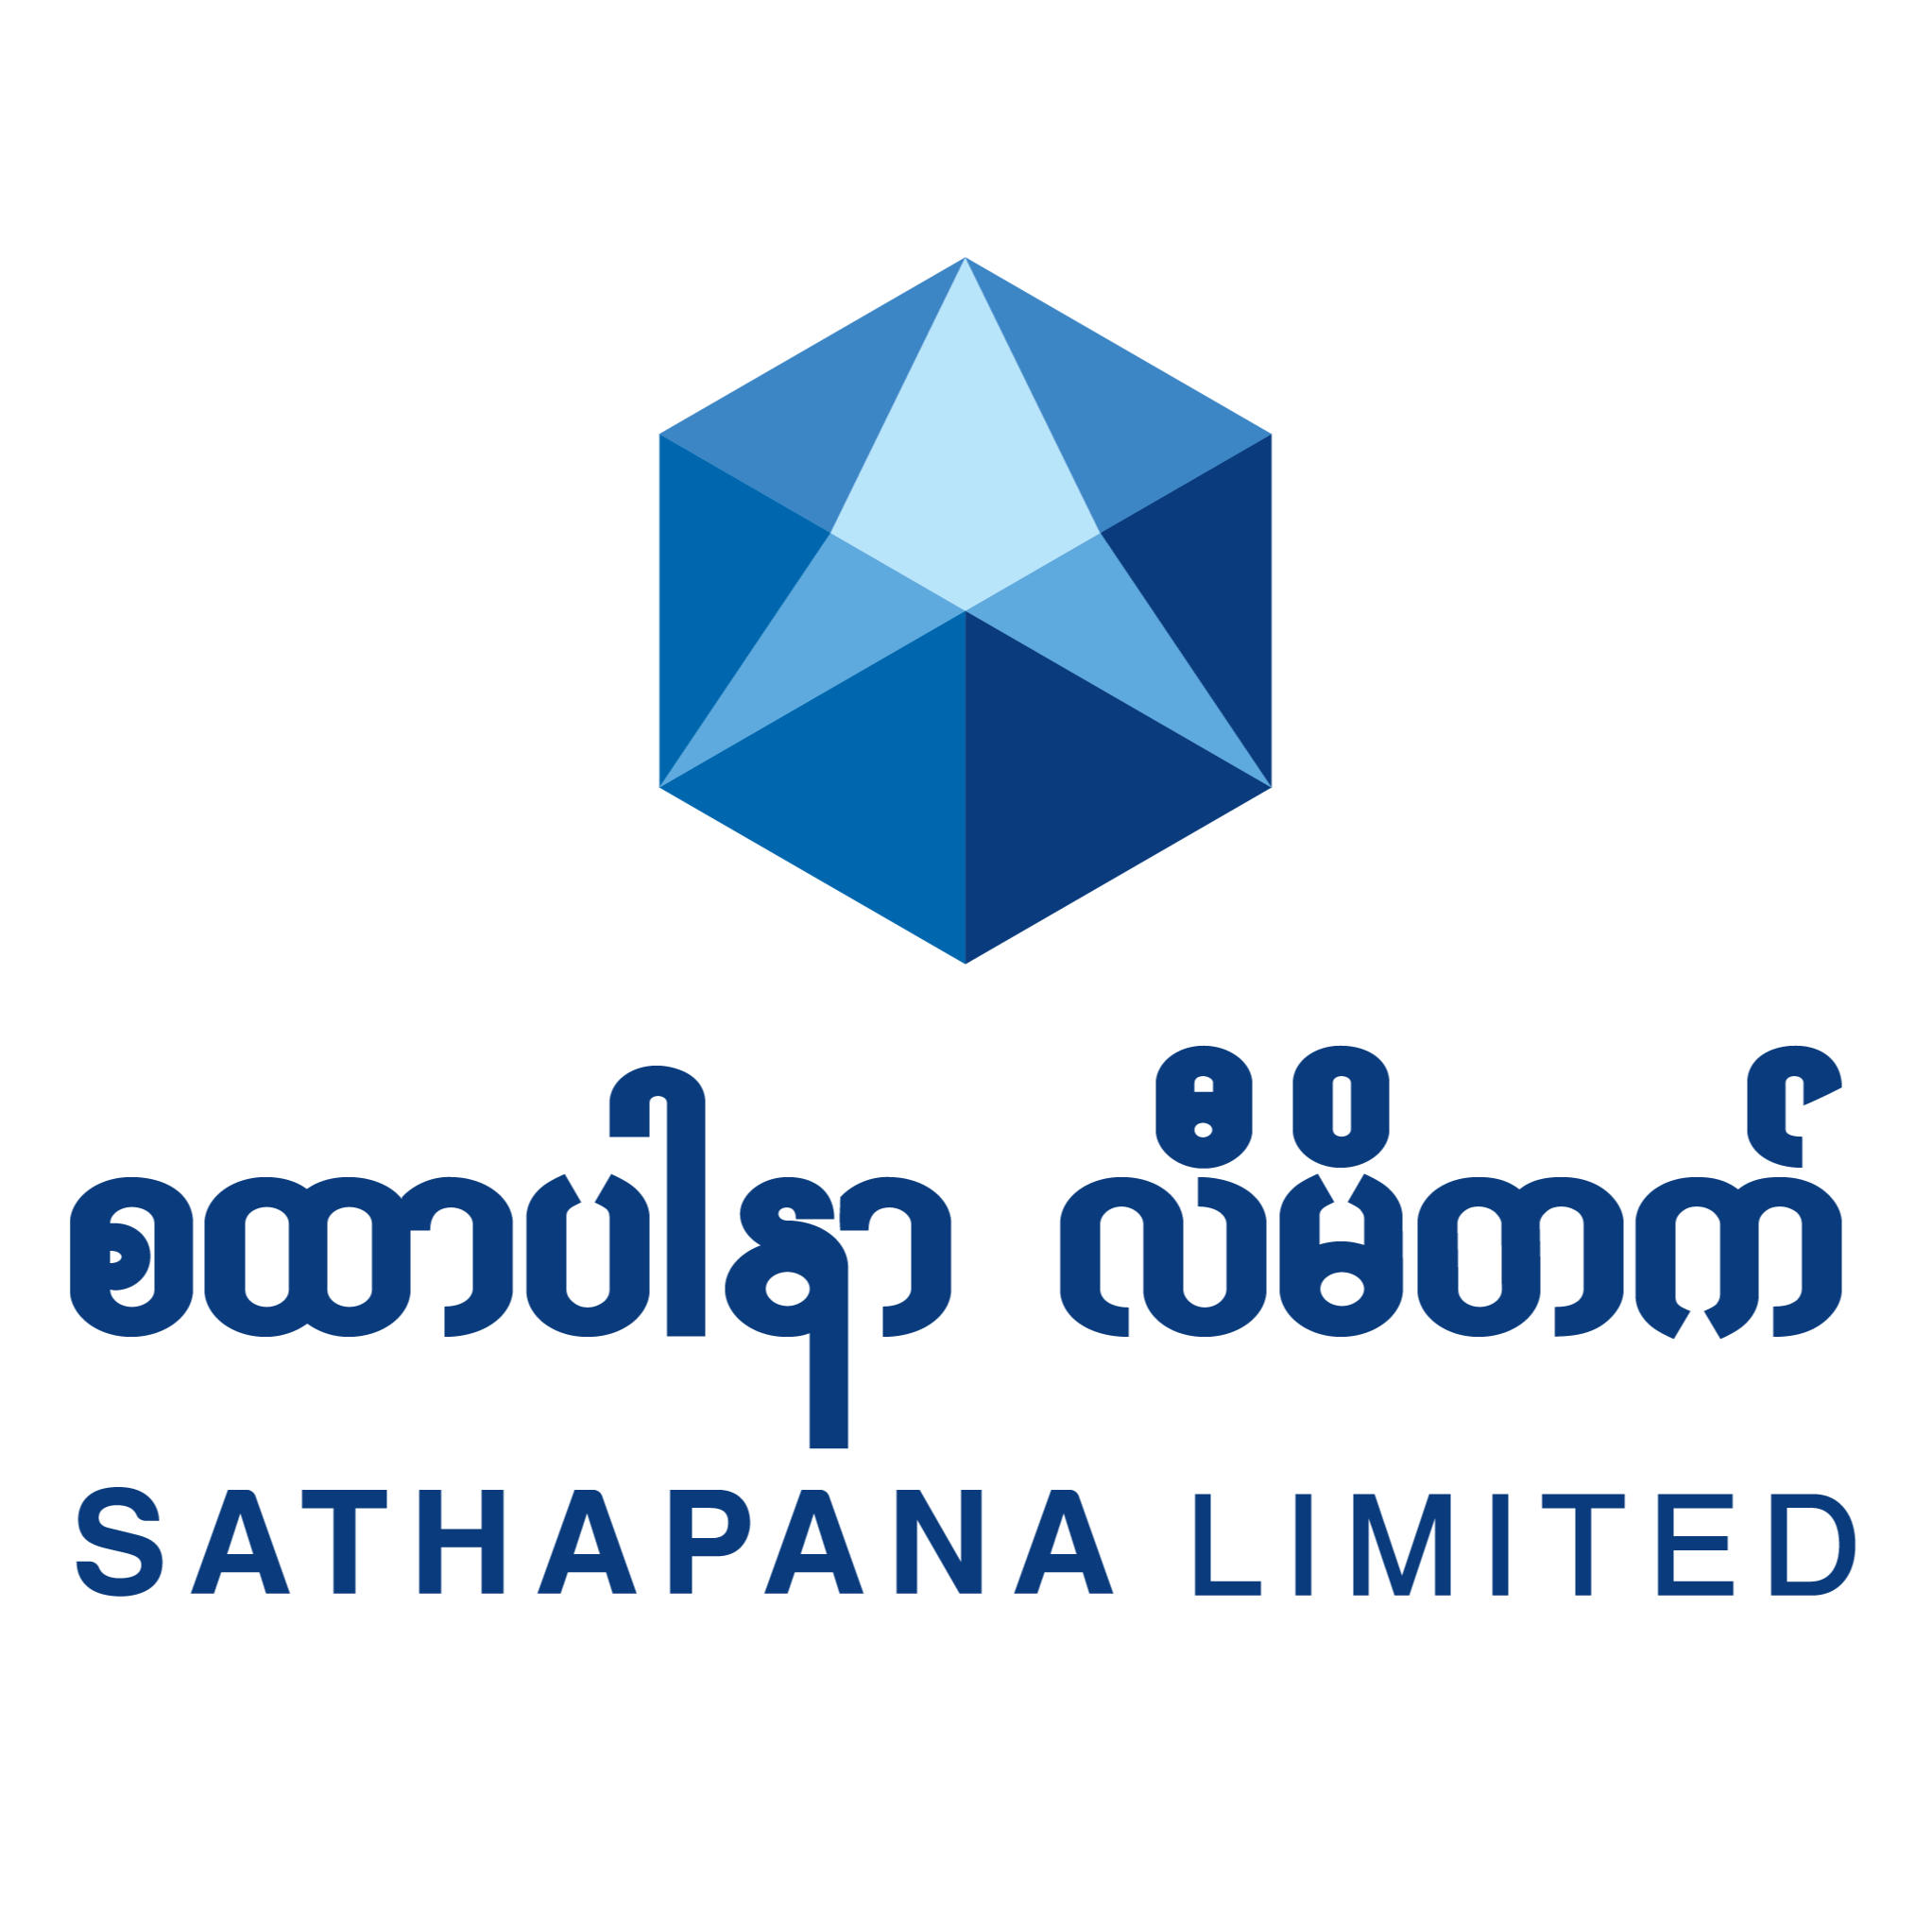 SATHAPANA Limited Myanmar